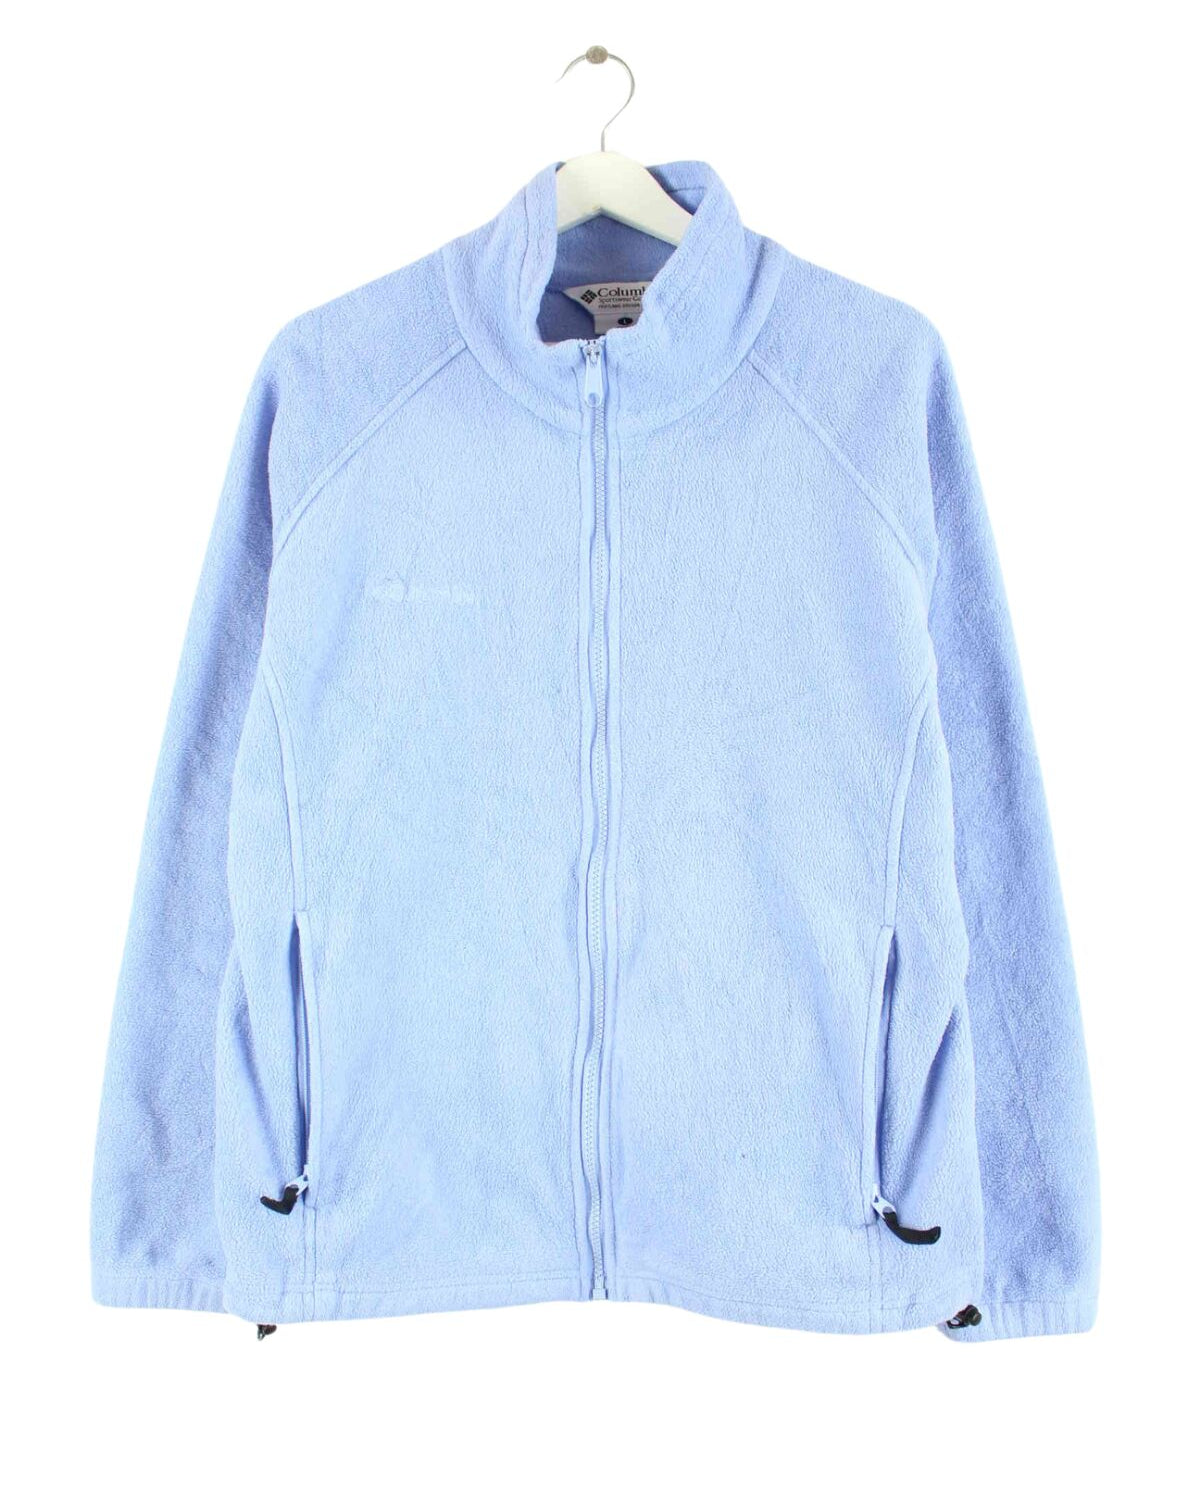 Columbia Damen 90s Vintage Fleece Sweatjacke Blau L (front image)